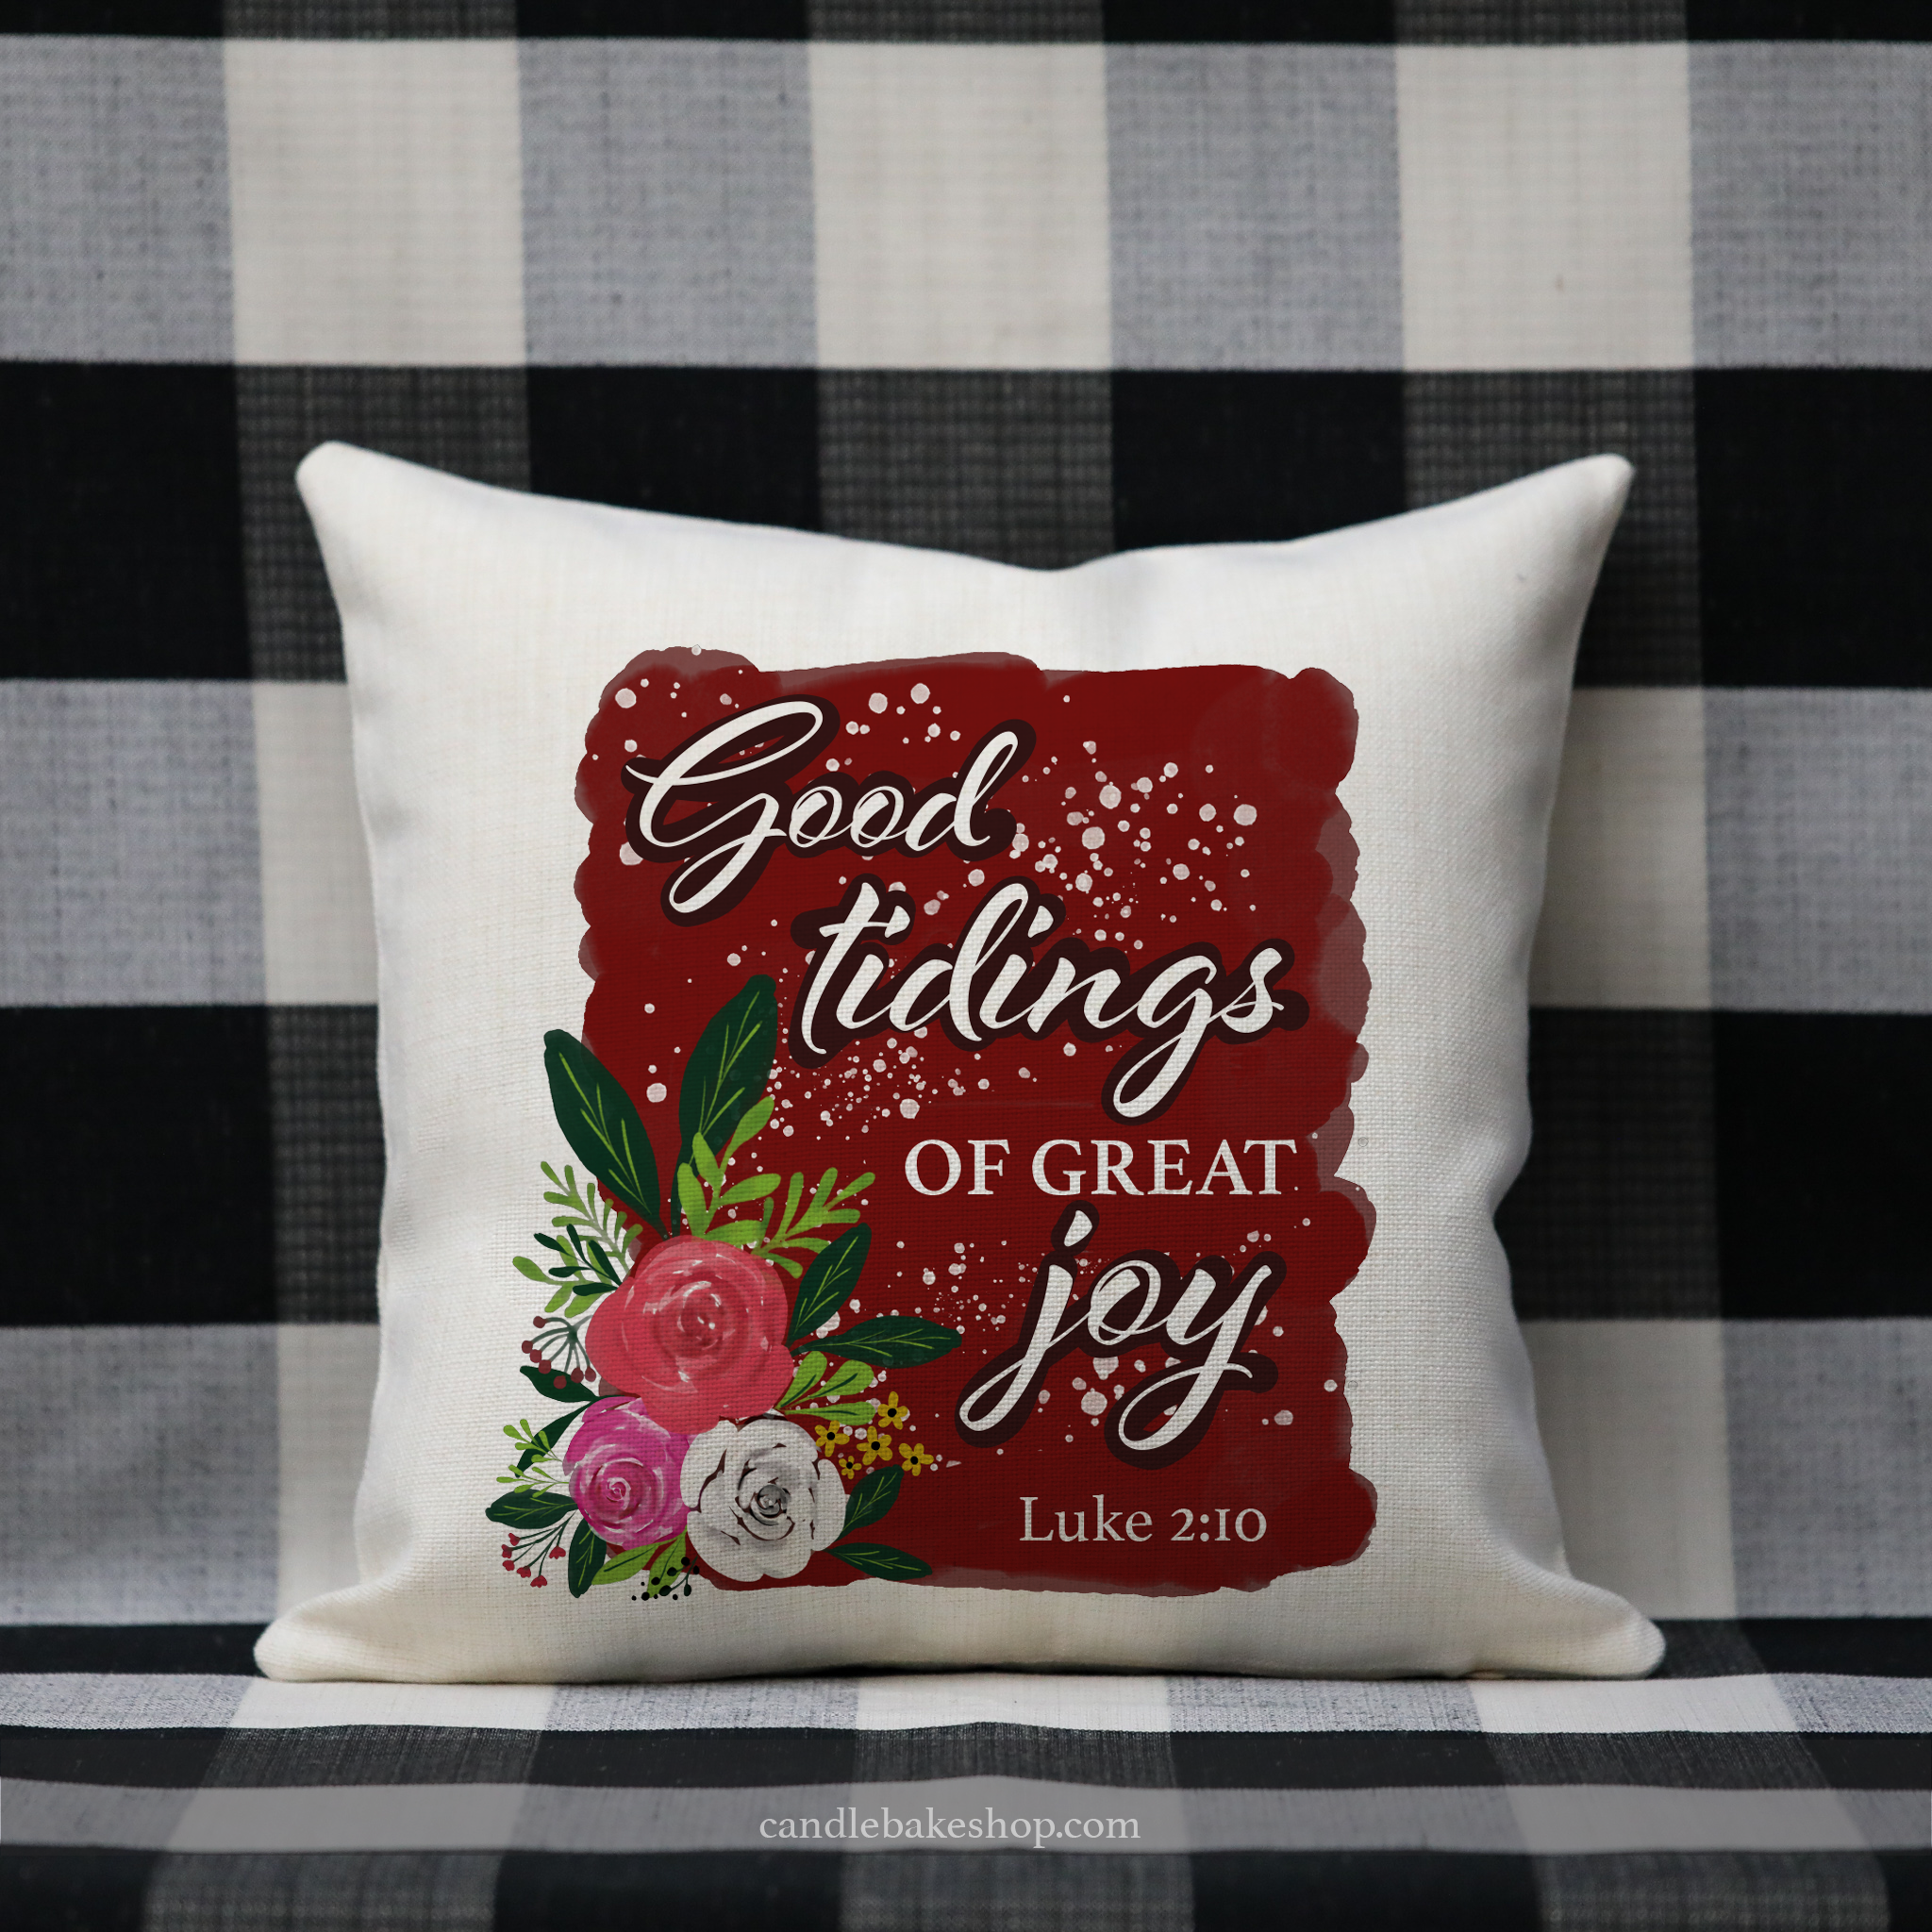 Good Tidings Of Great Joy - Christmas Pillow - Luke 2:10